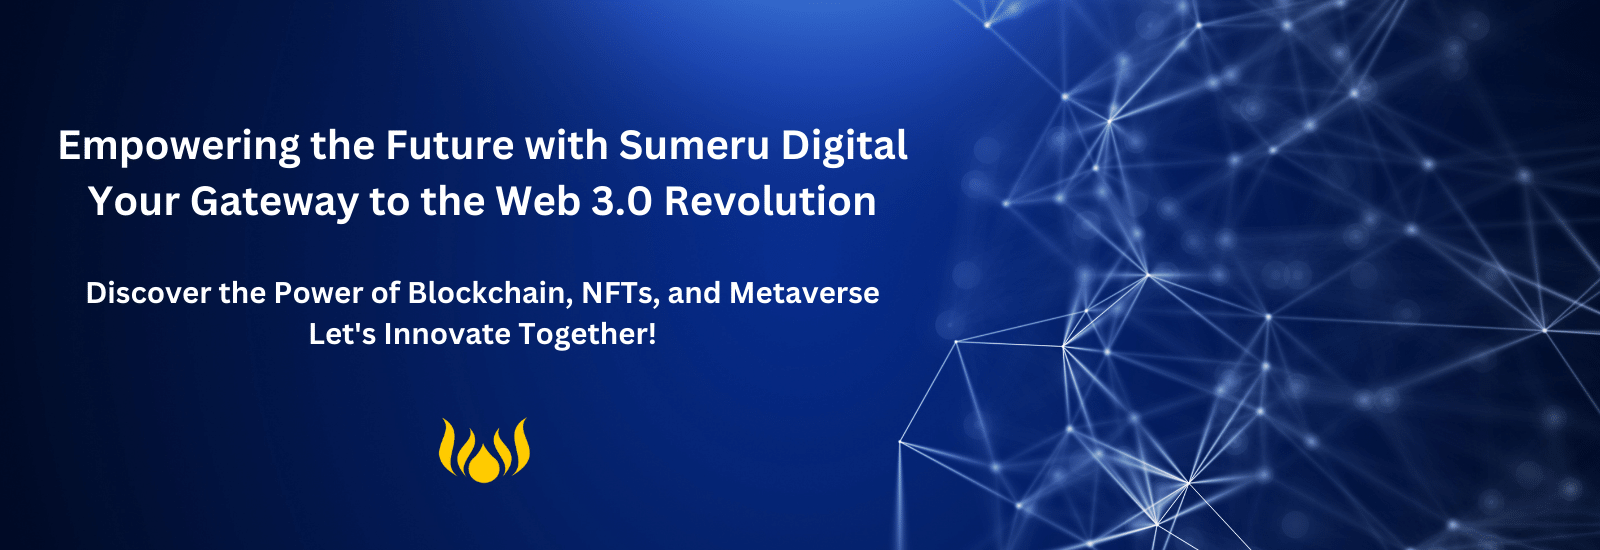 sumeru_digital_web3-company-metaverse-blockchain